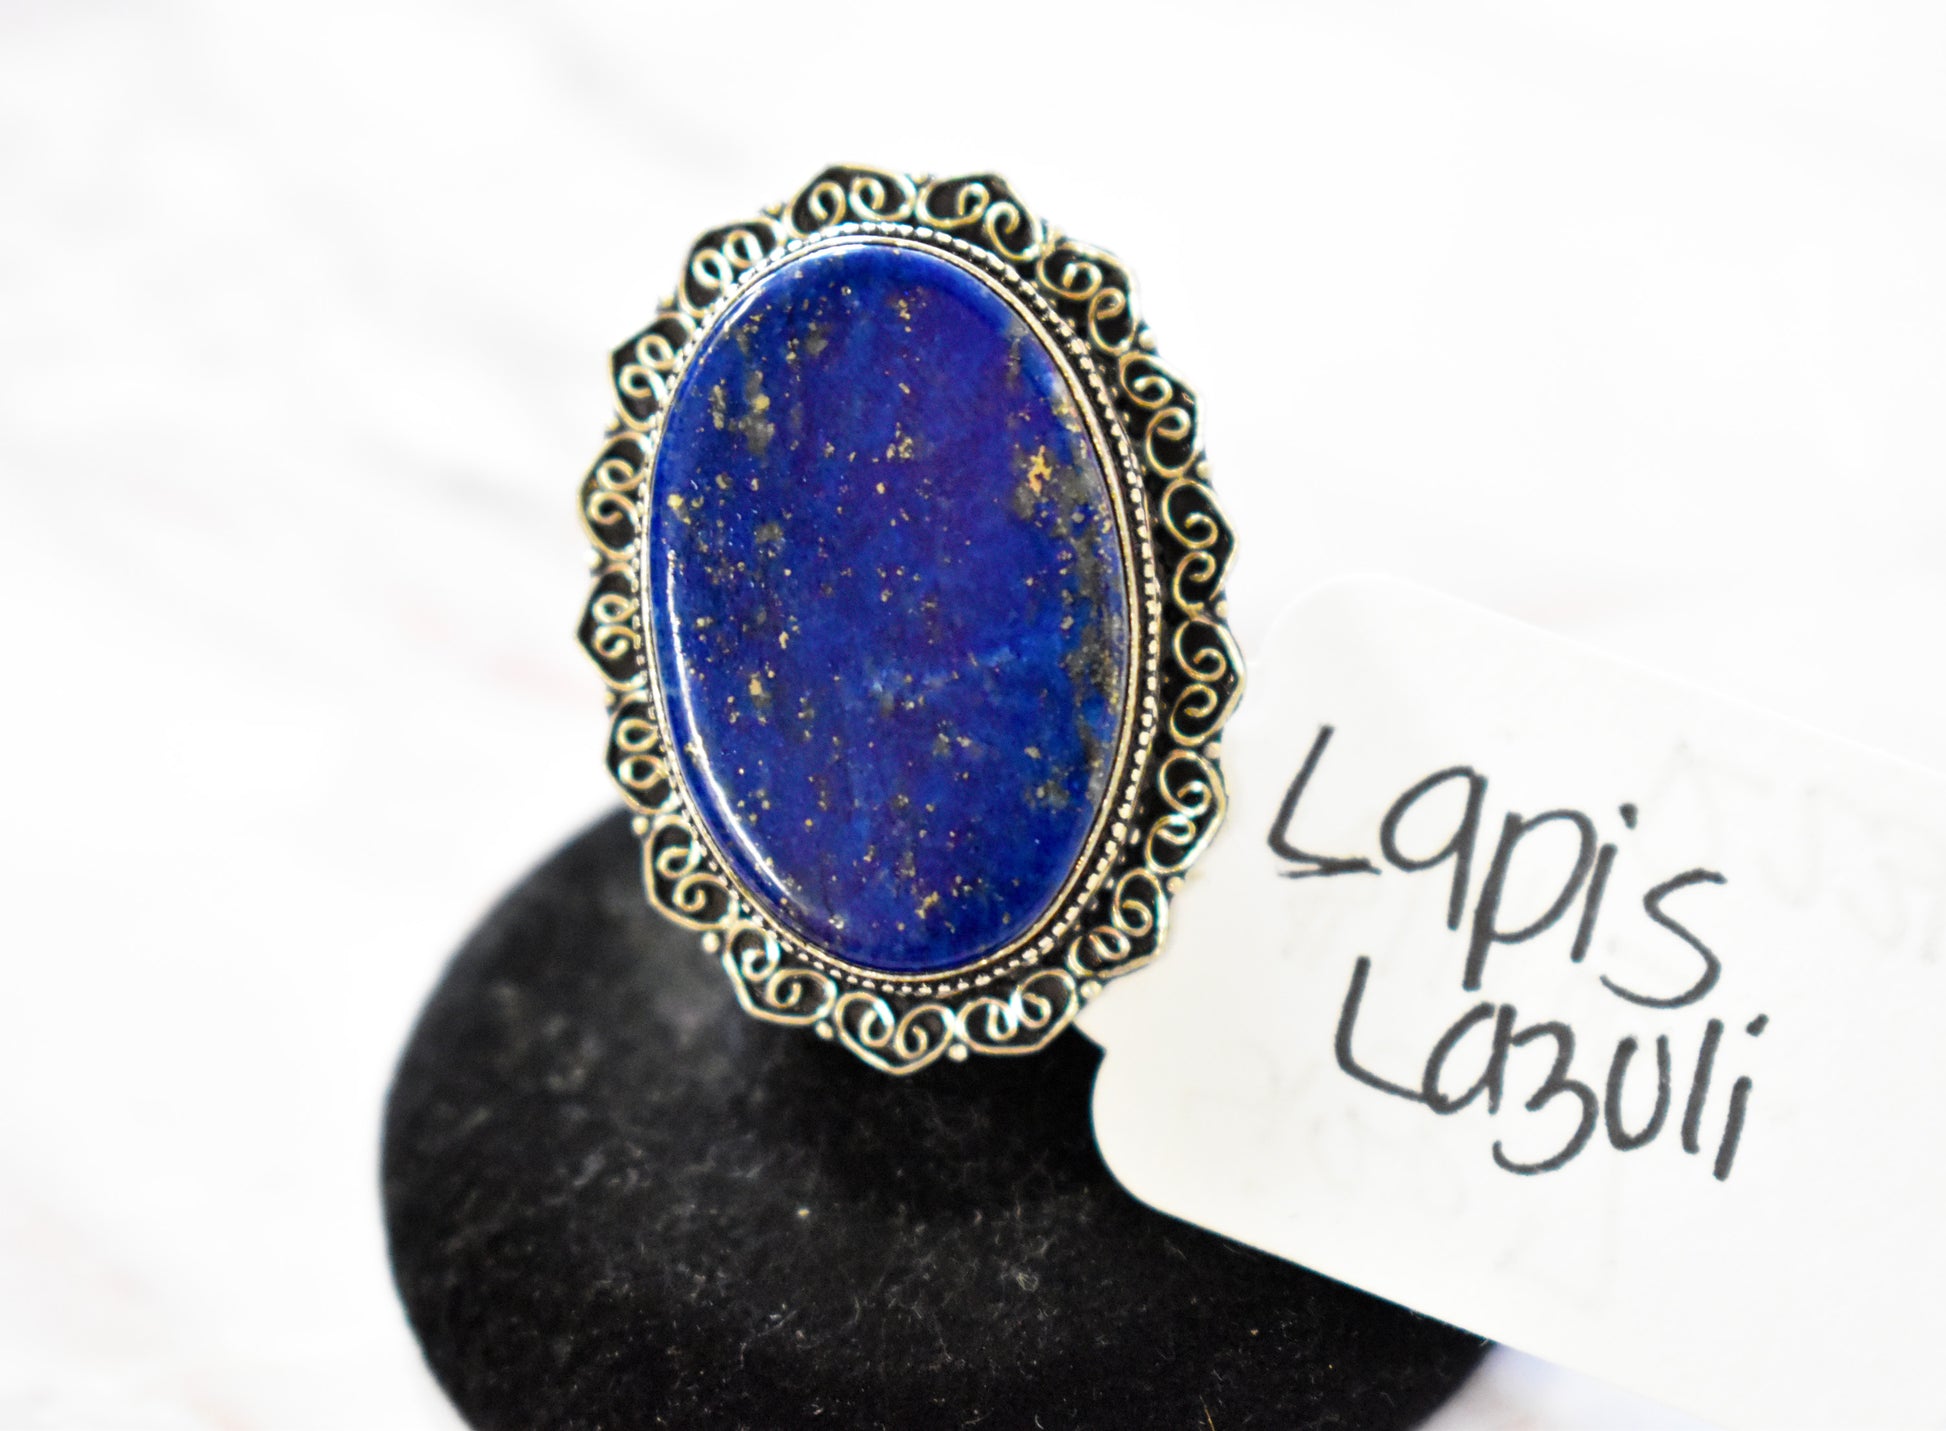 stones-of-transformation - Lapis Lazuli Ring (Size 7) - Stones of Transformation - 